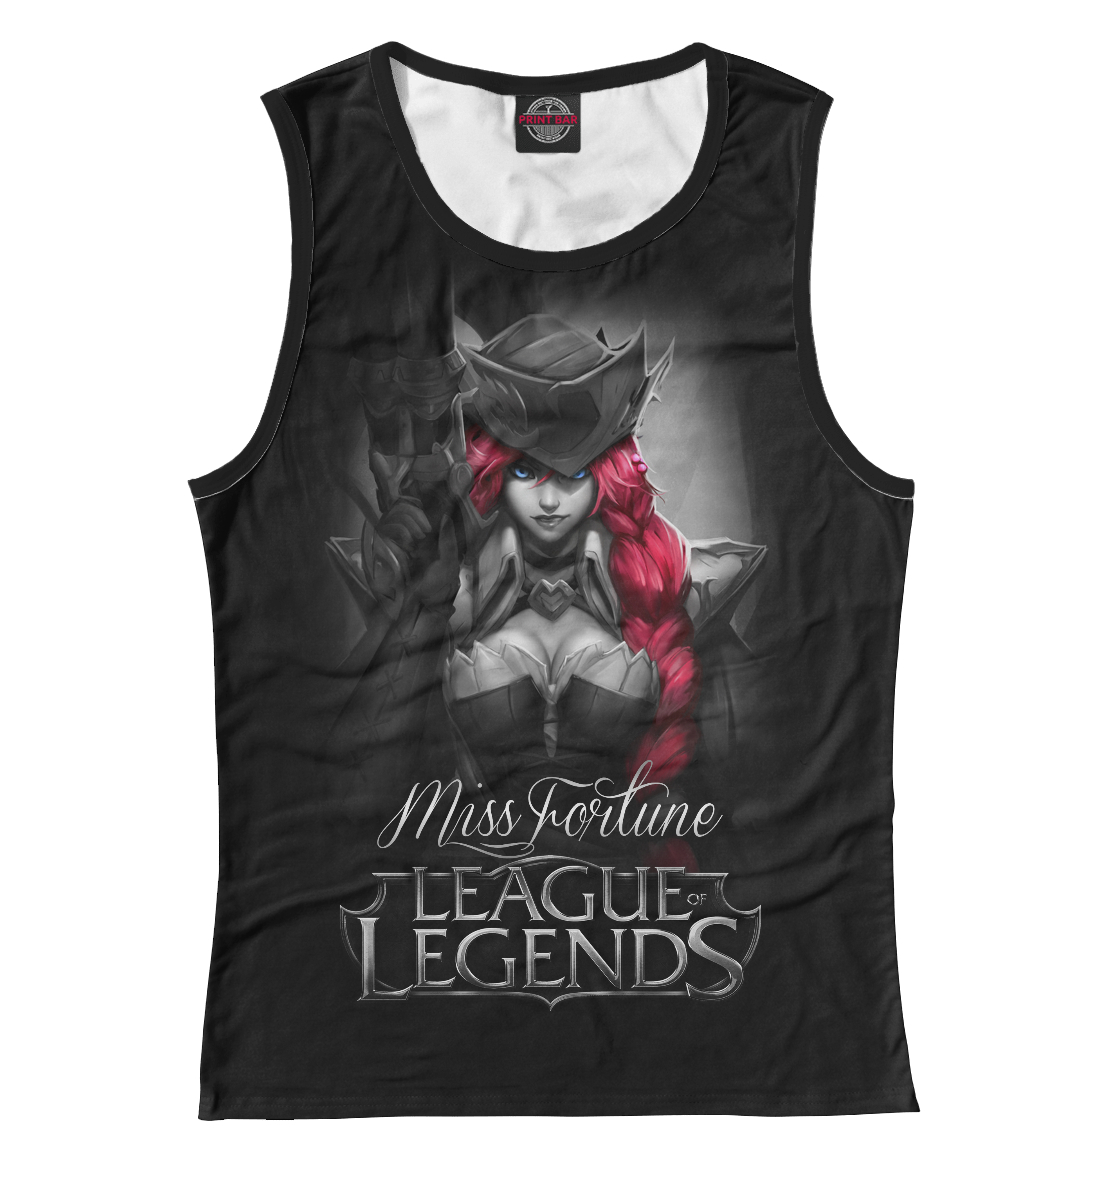 Женская Майка с принтом League of Legends. Мисс Фортуна, артикул LOL-972383-may-1mp